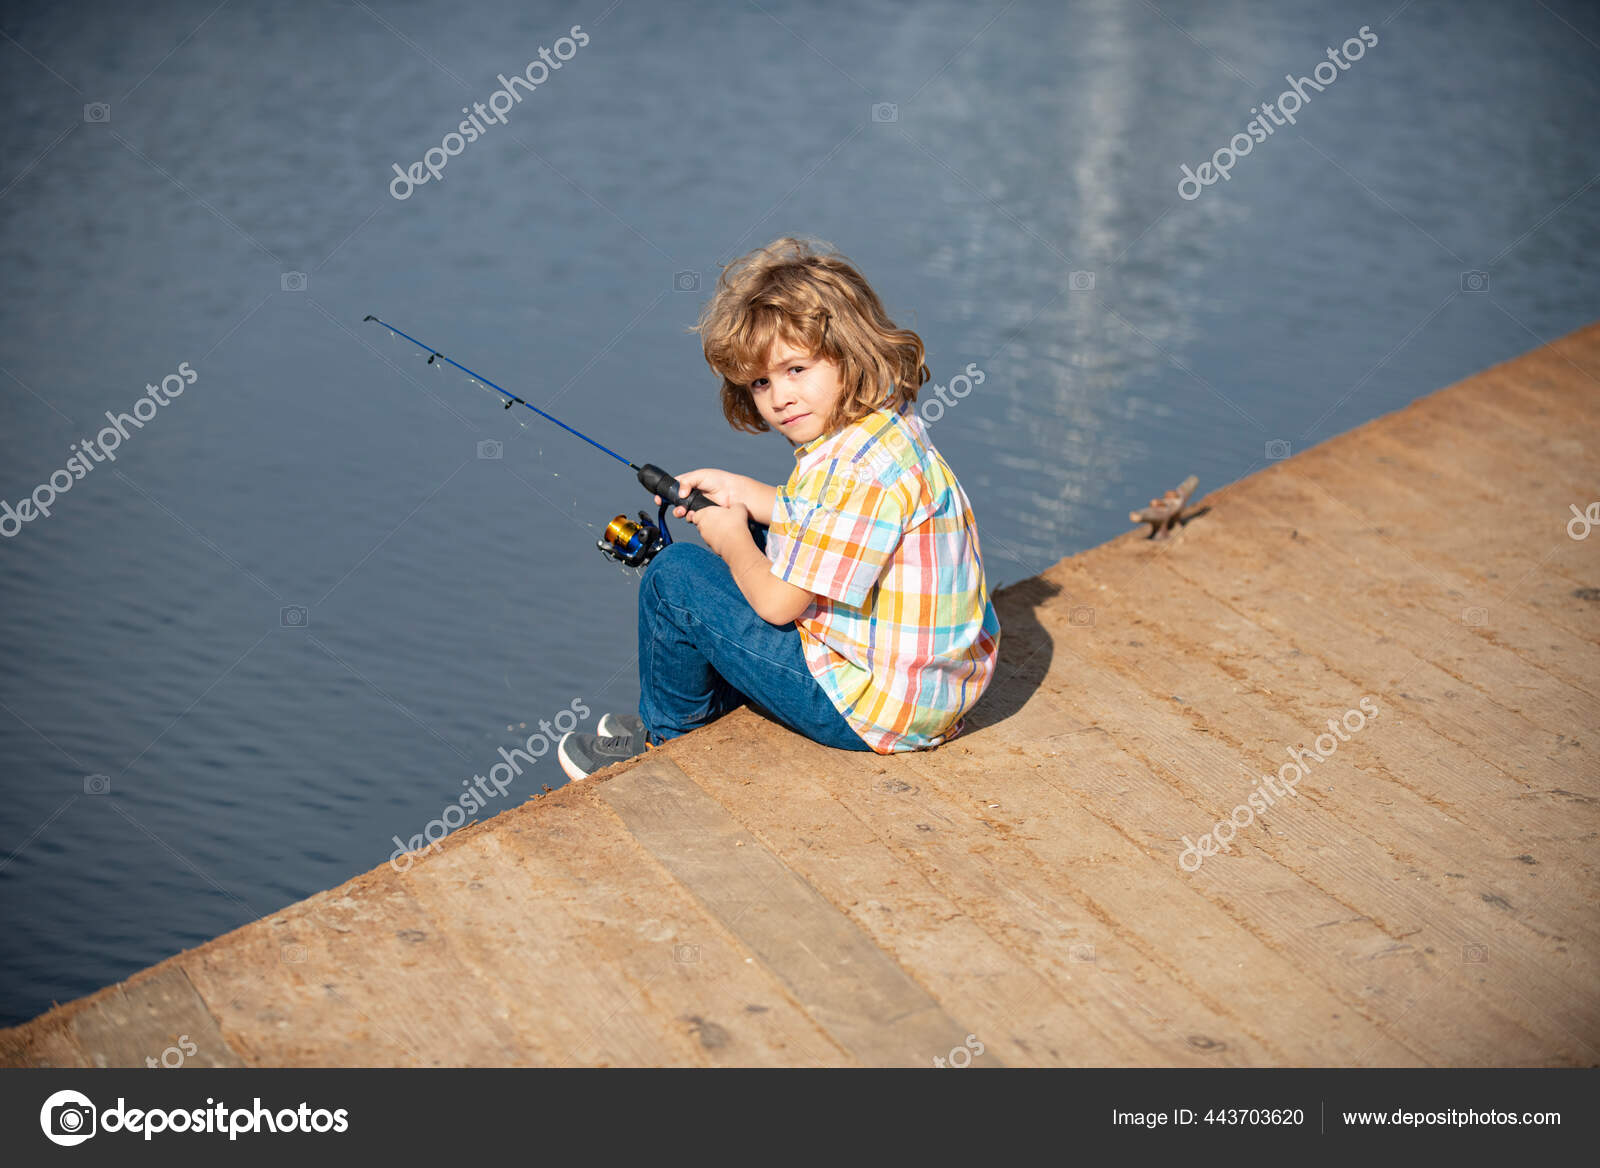 https://st2.depositphotos.com/3584053/44370/i/1600/depositphotos_443703620-stock-photo-young-child-fisher-kid-fishing.jpg